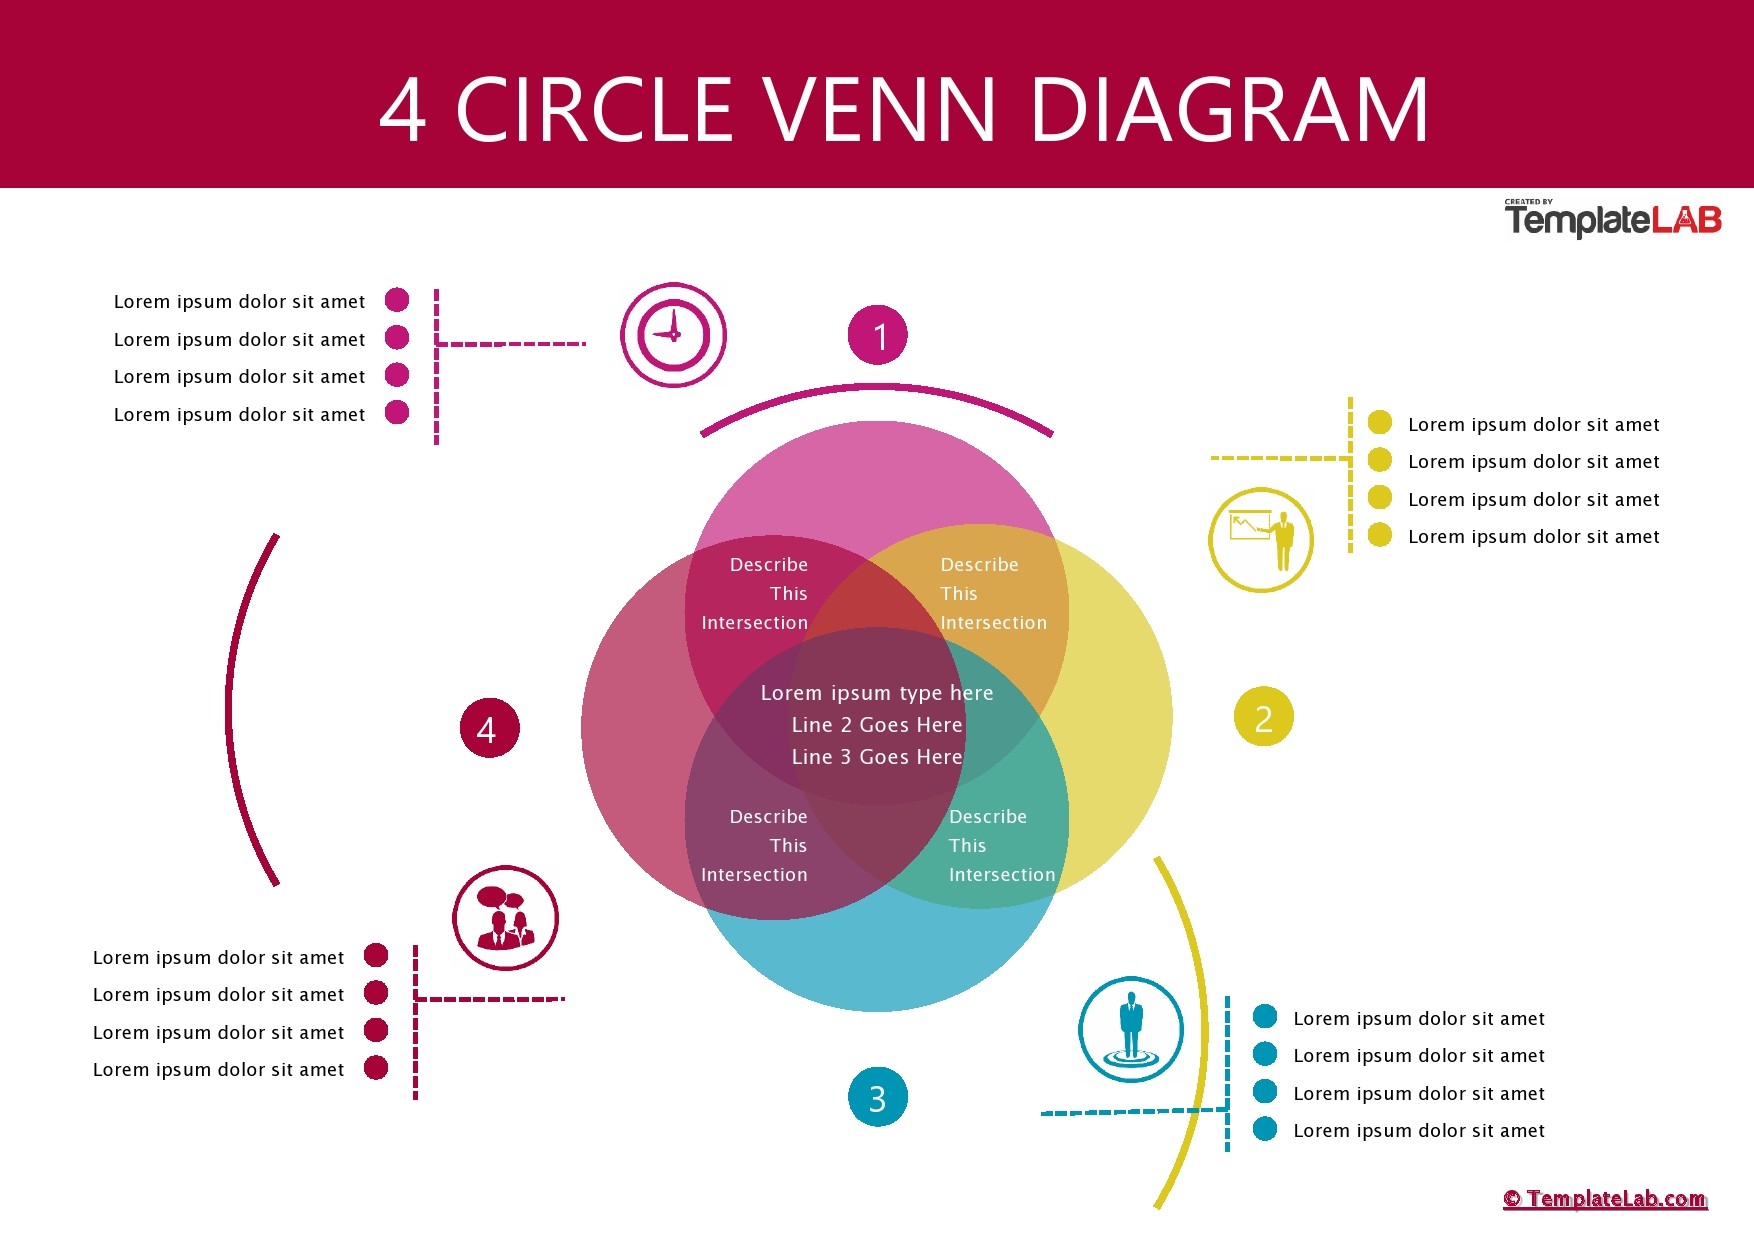 Free 4 Circle Venn Diagram Template - TemplateLab.com